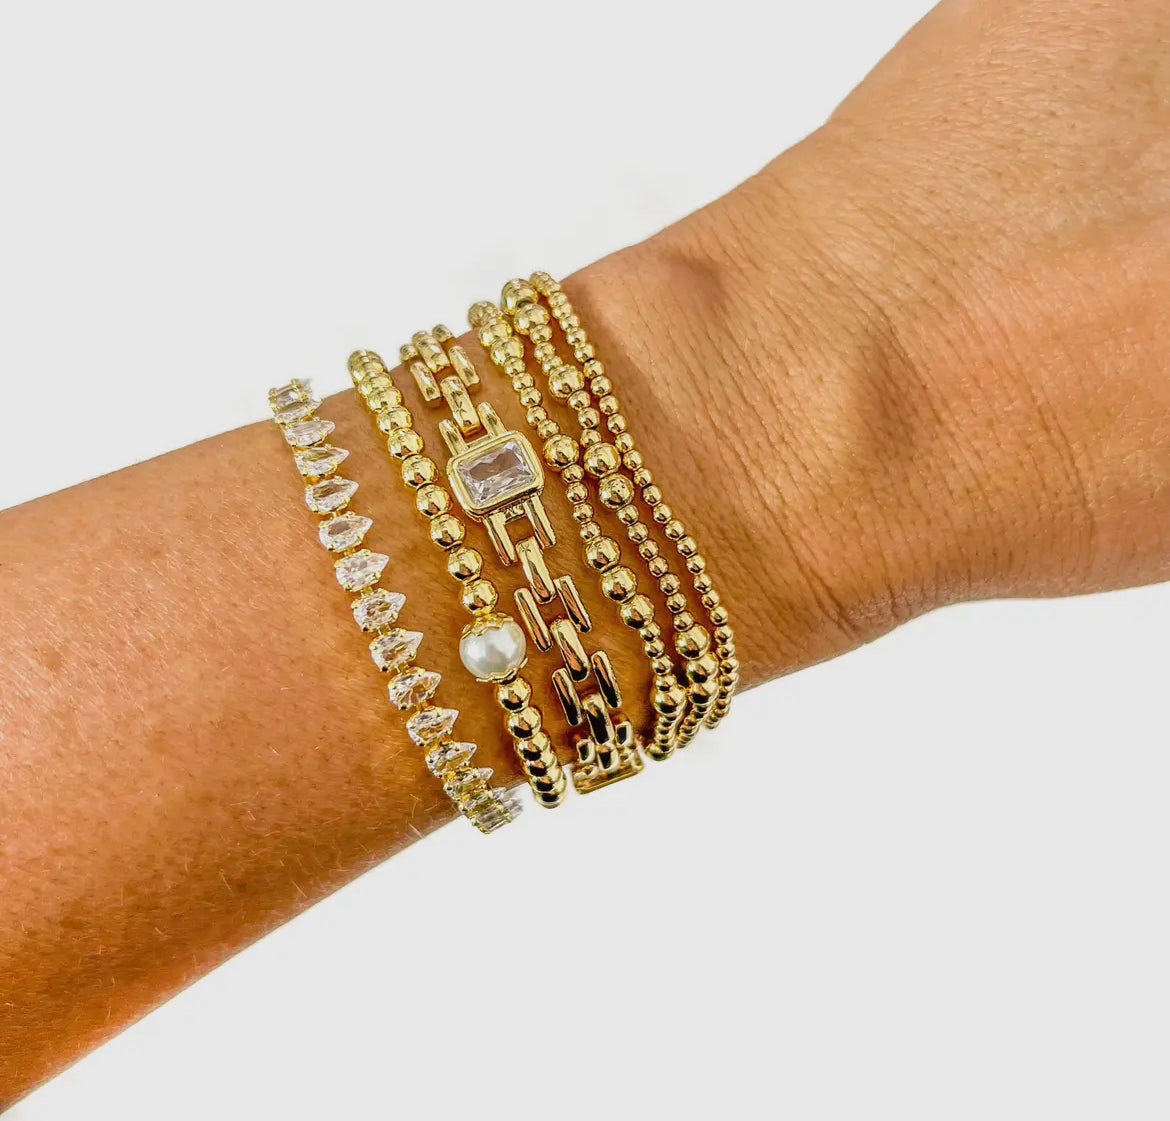 Mia Bella 18k Gold Filled Bracelet